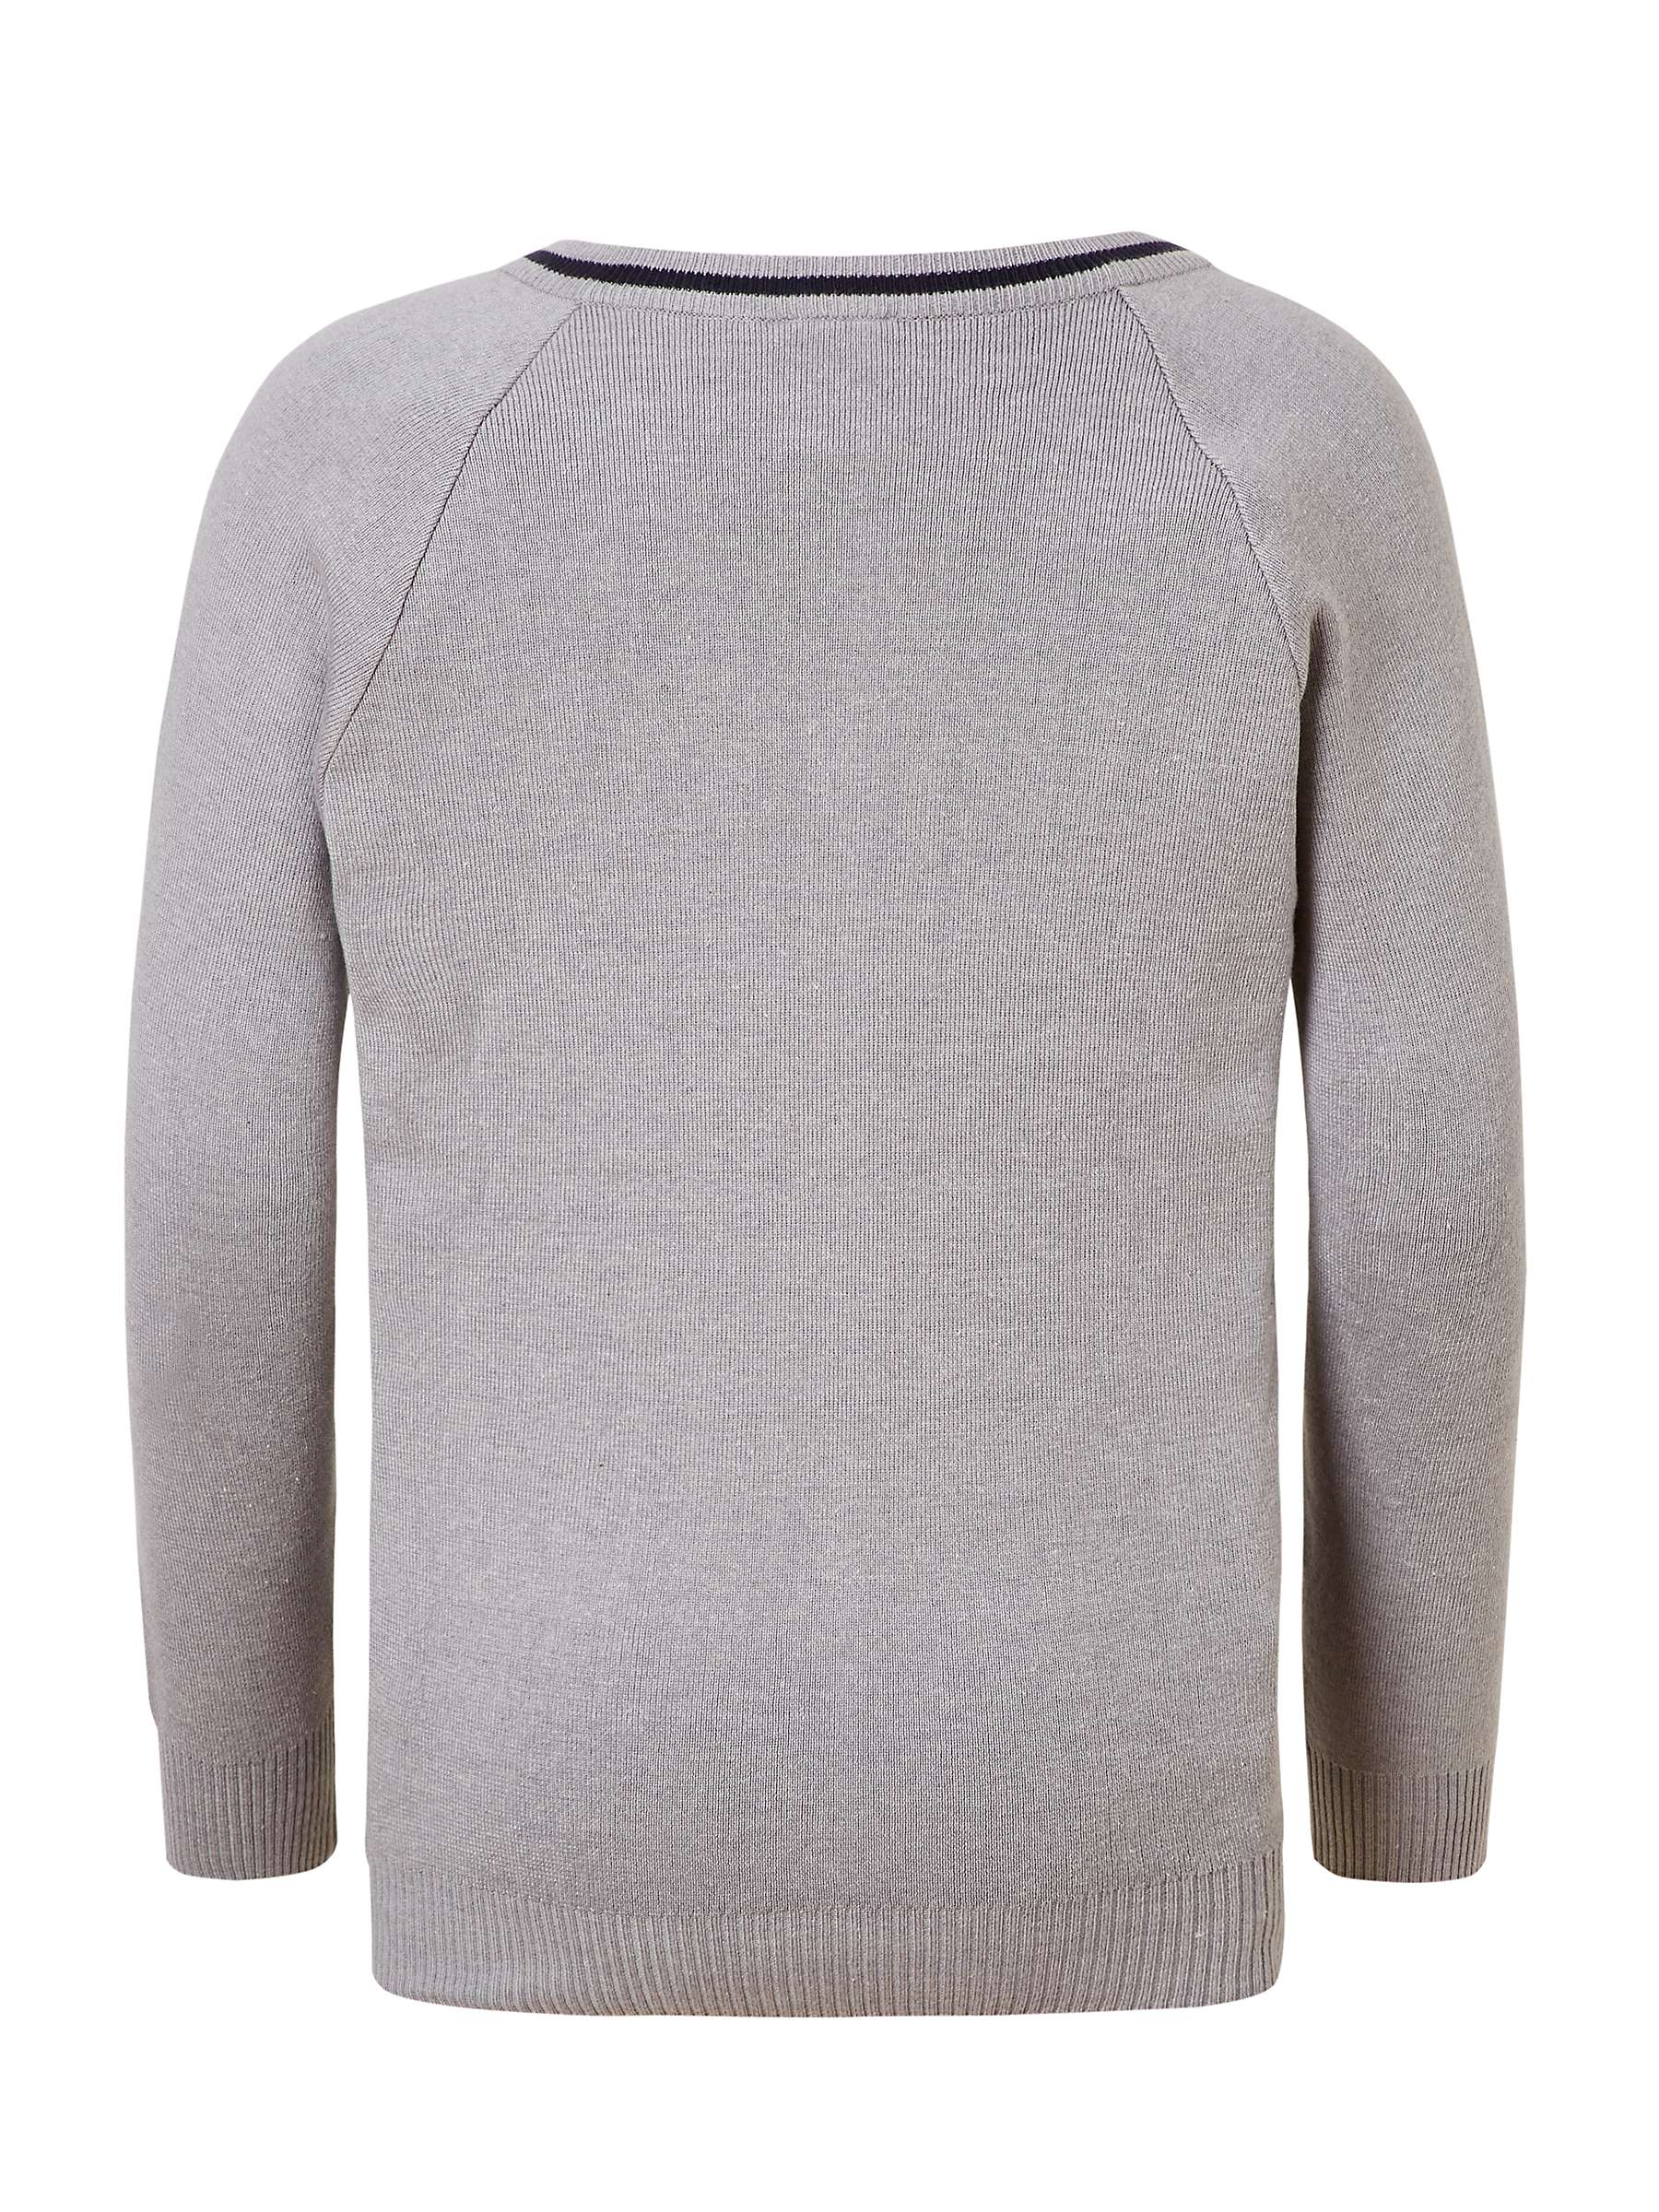 Buy Chigwell School Boys' Pullover, Grey Online at johnlewis.com